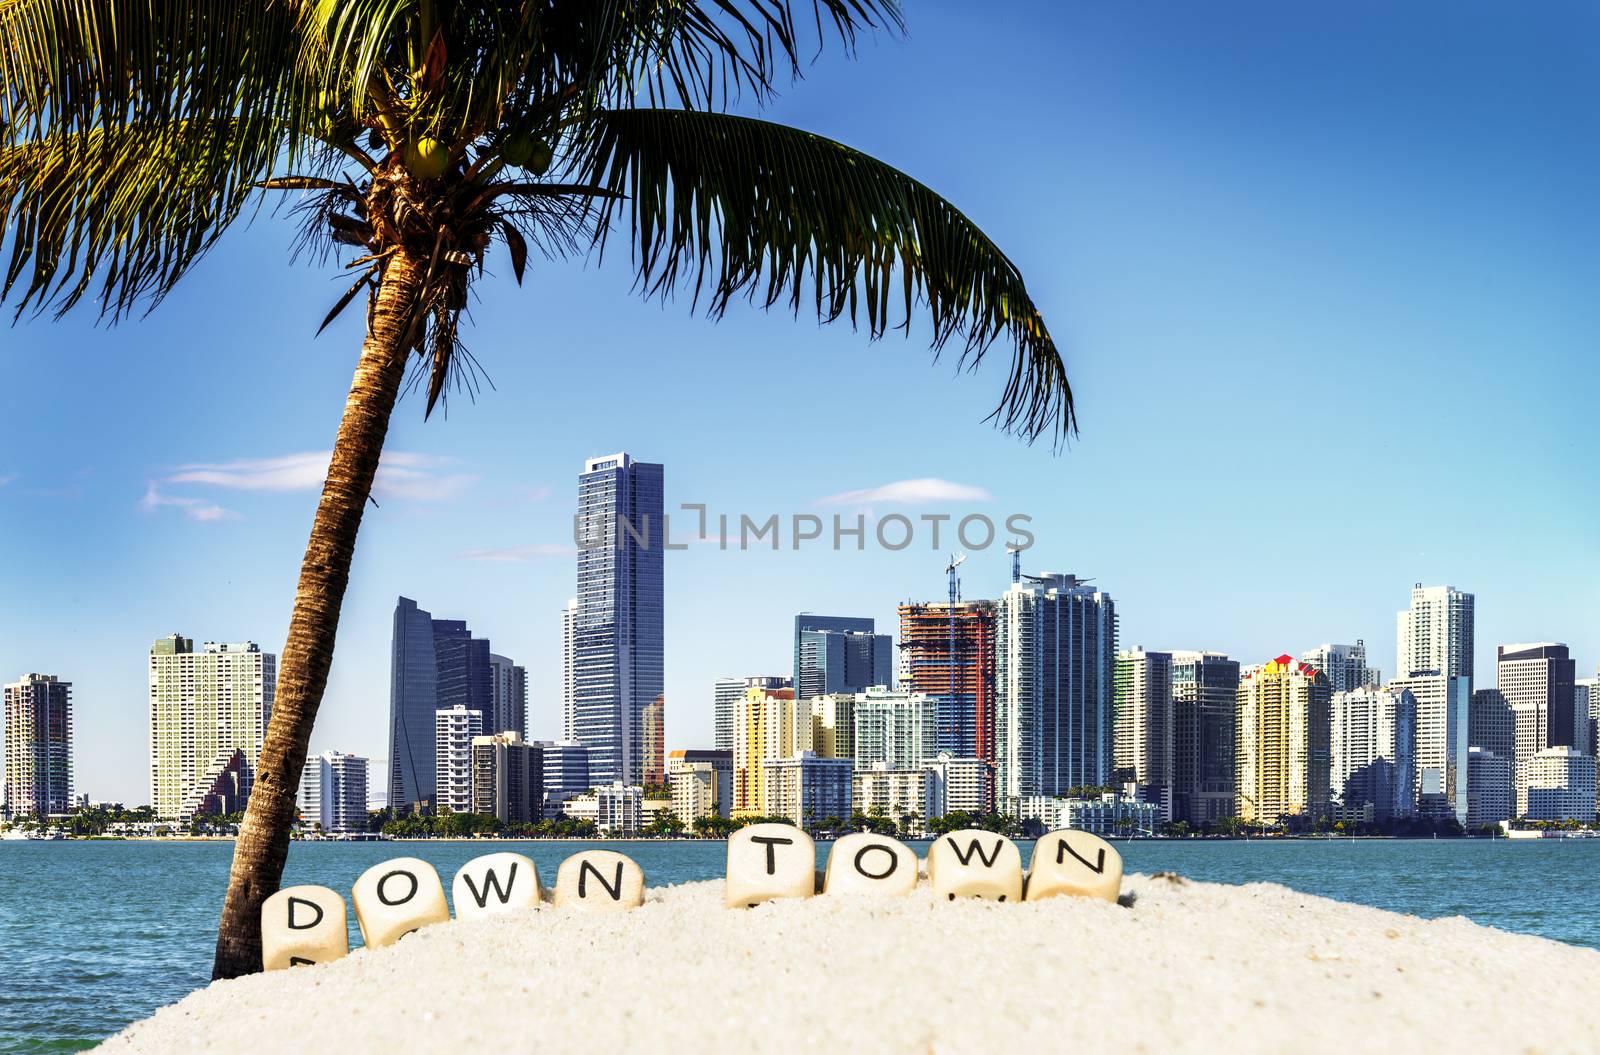 Miami Downtown skyline in daytime with Biscayne Bay.